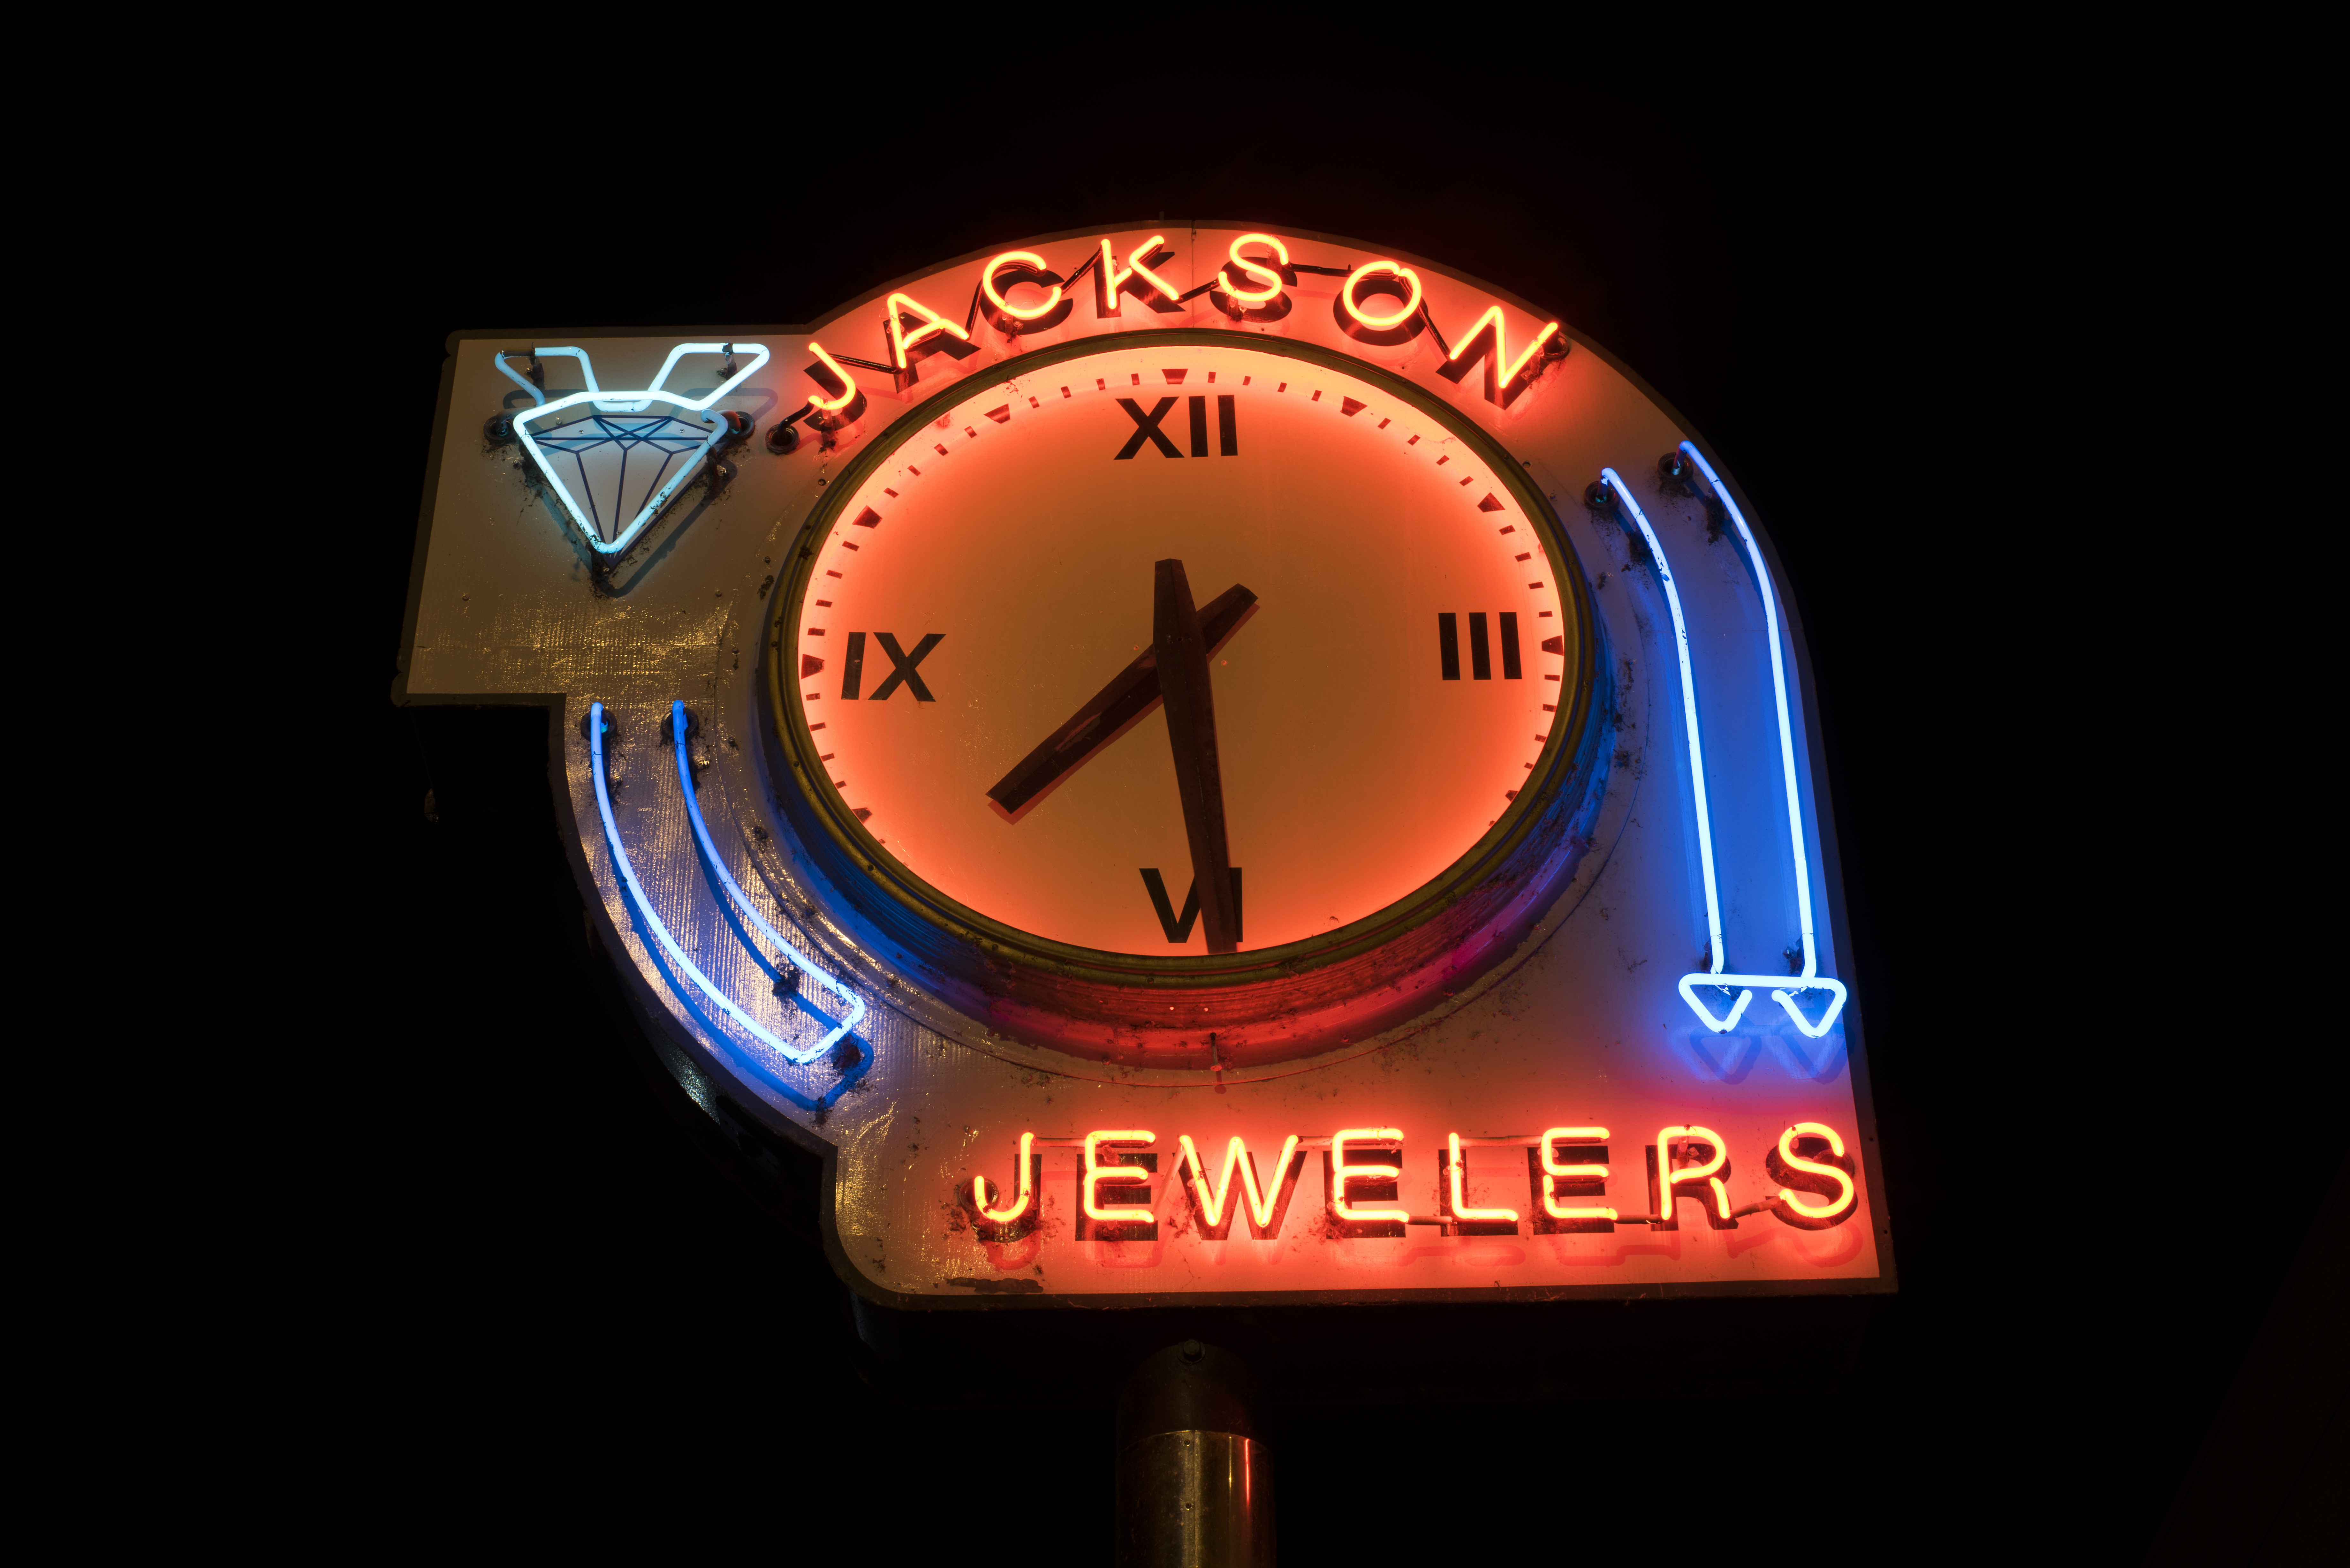 Jackson Jewelers - 225 Liberty Street NE, Salem, Oregon U.S.A. - January 20, 2018